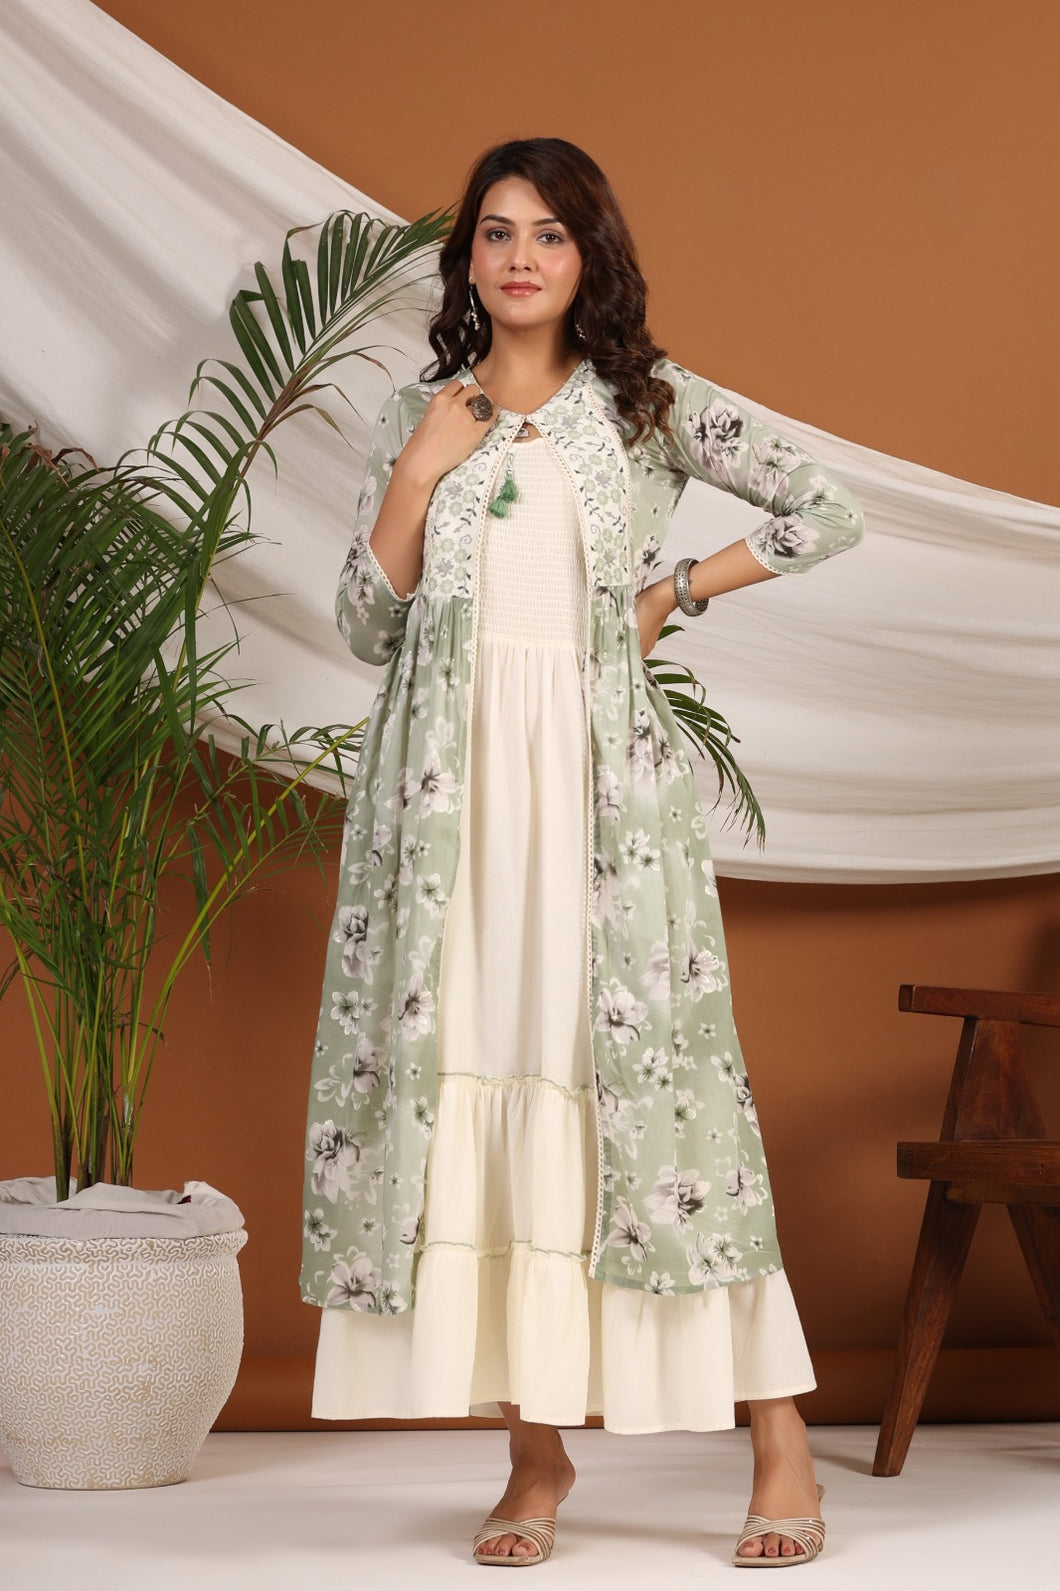 Cotton double layer dress